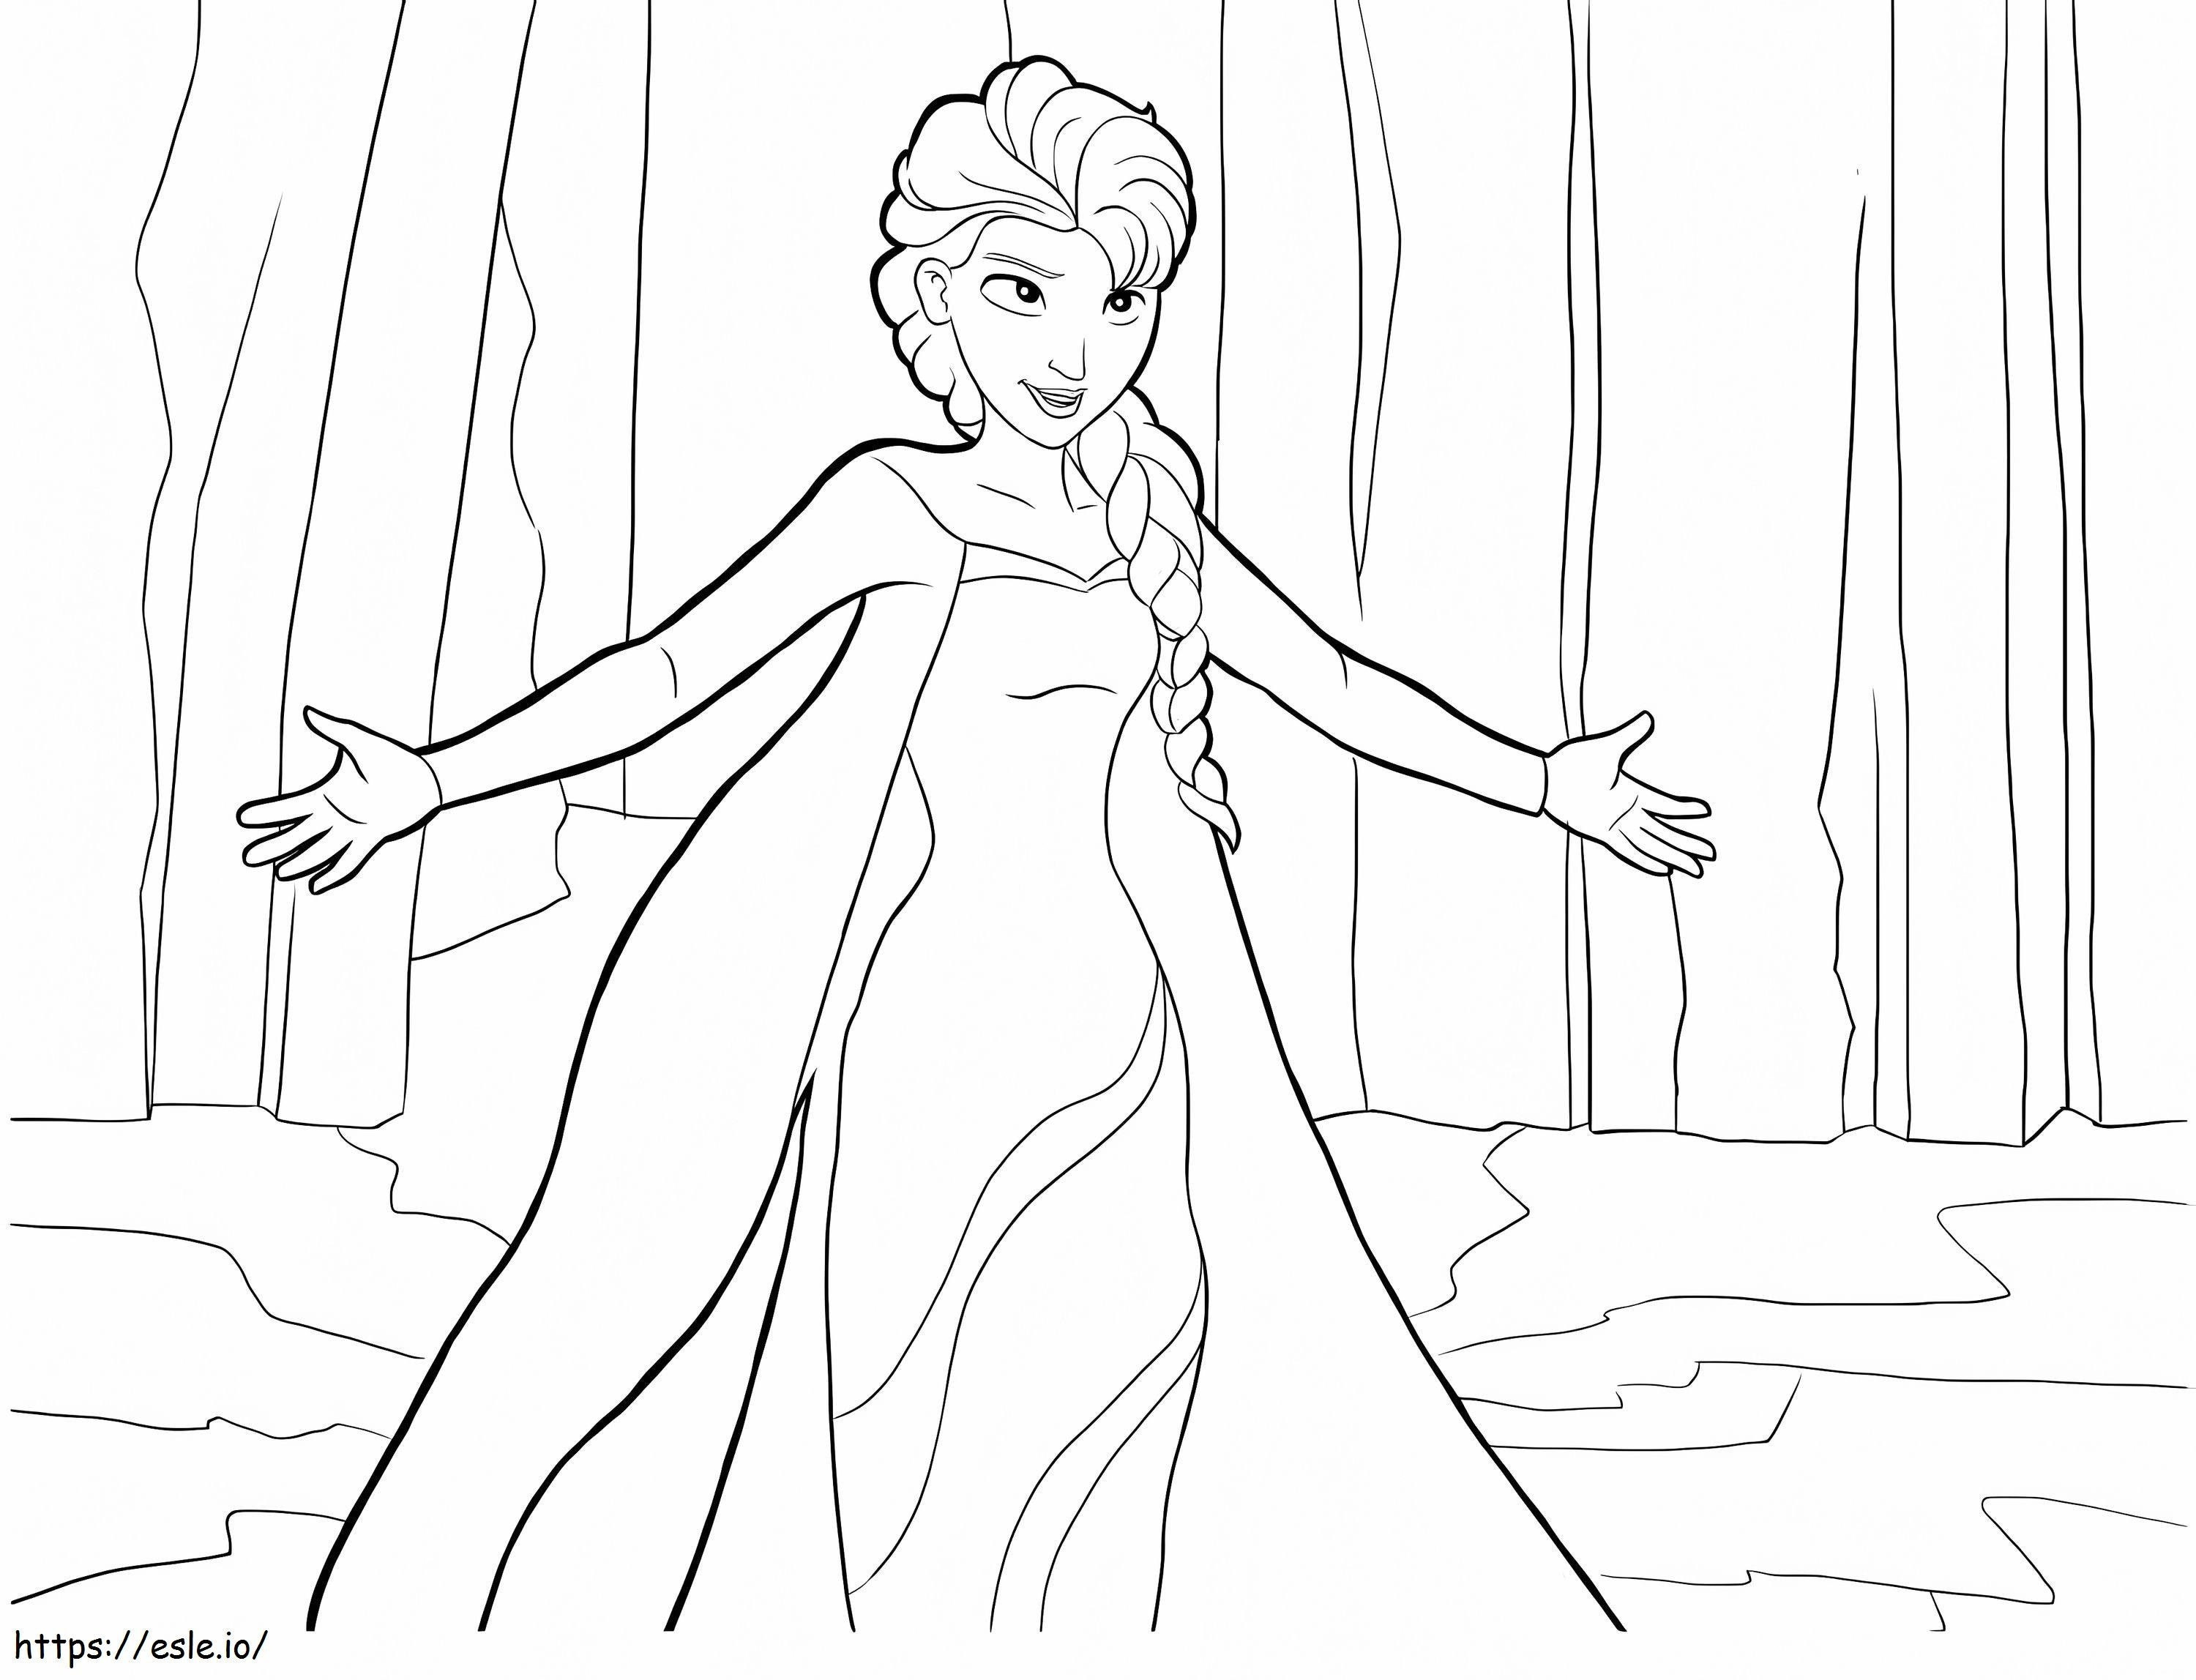 Elsa Singing coloring page